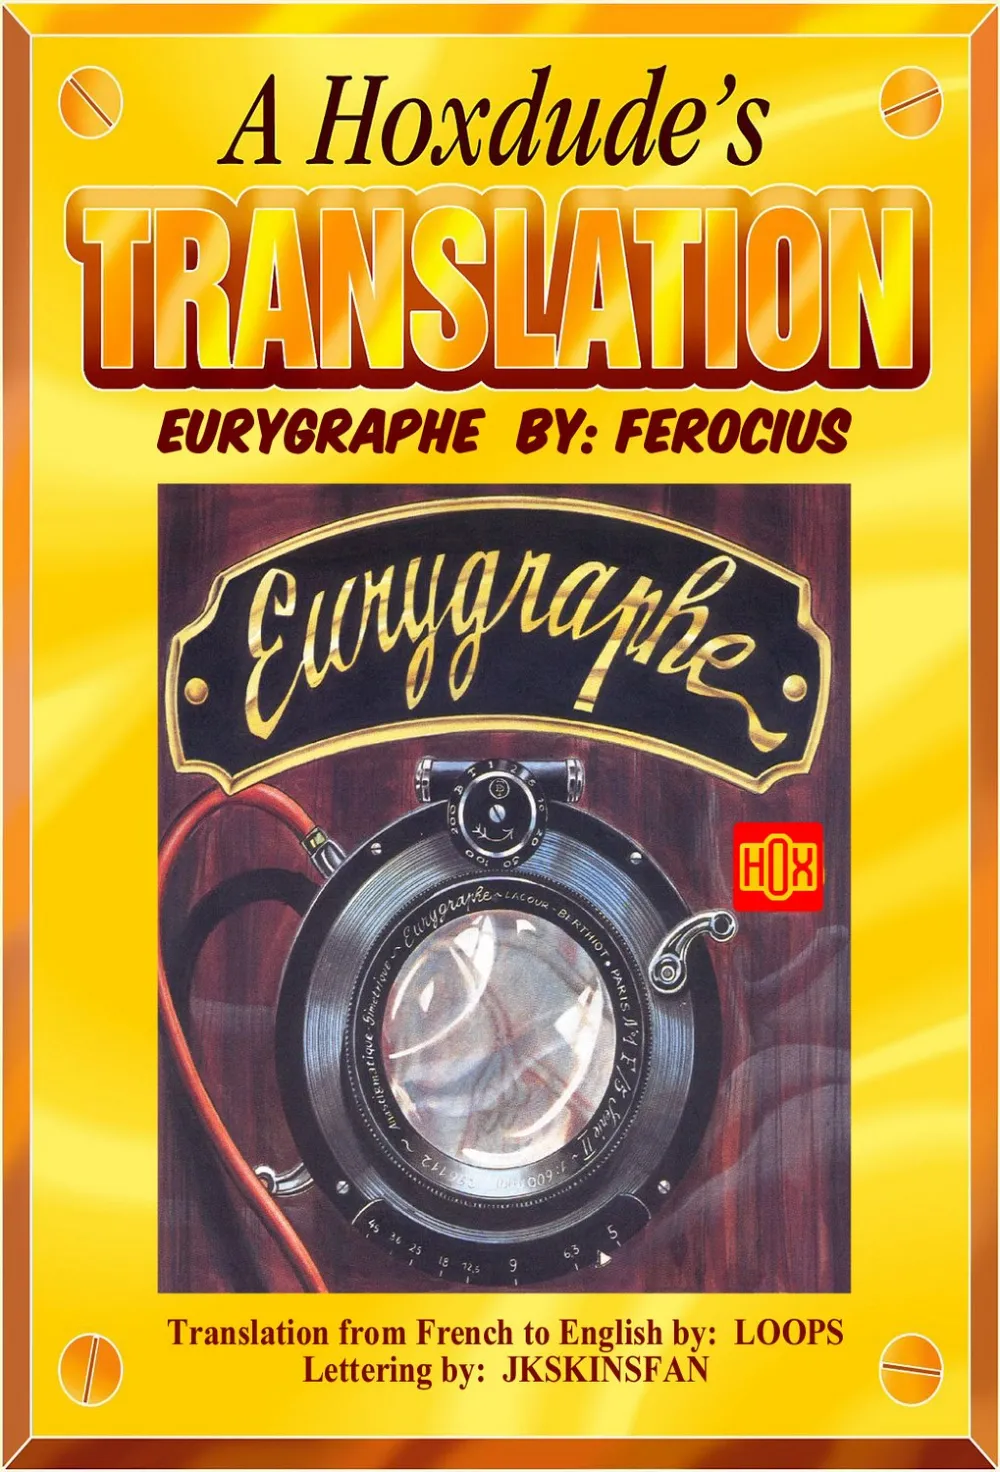 Eurygraphe – Ferocius (Erotic Comix) - Page 1